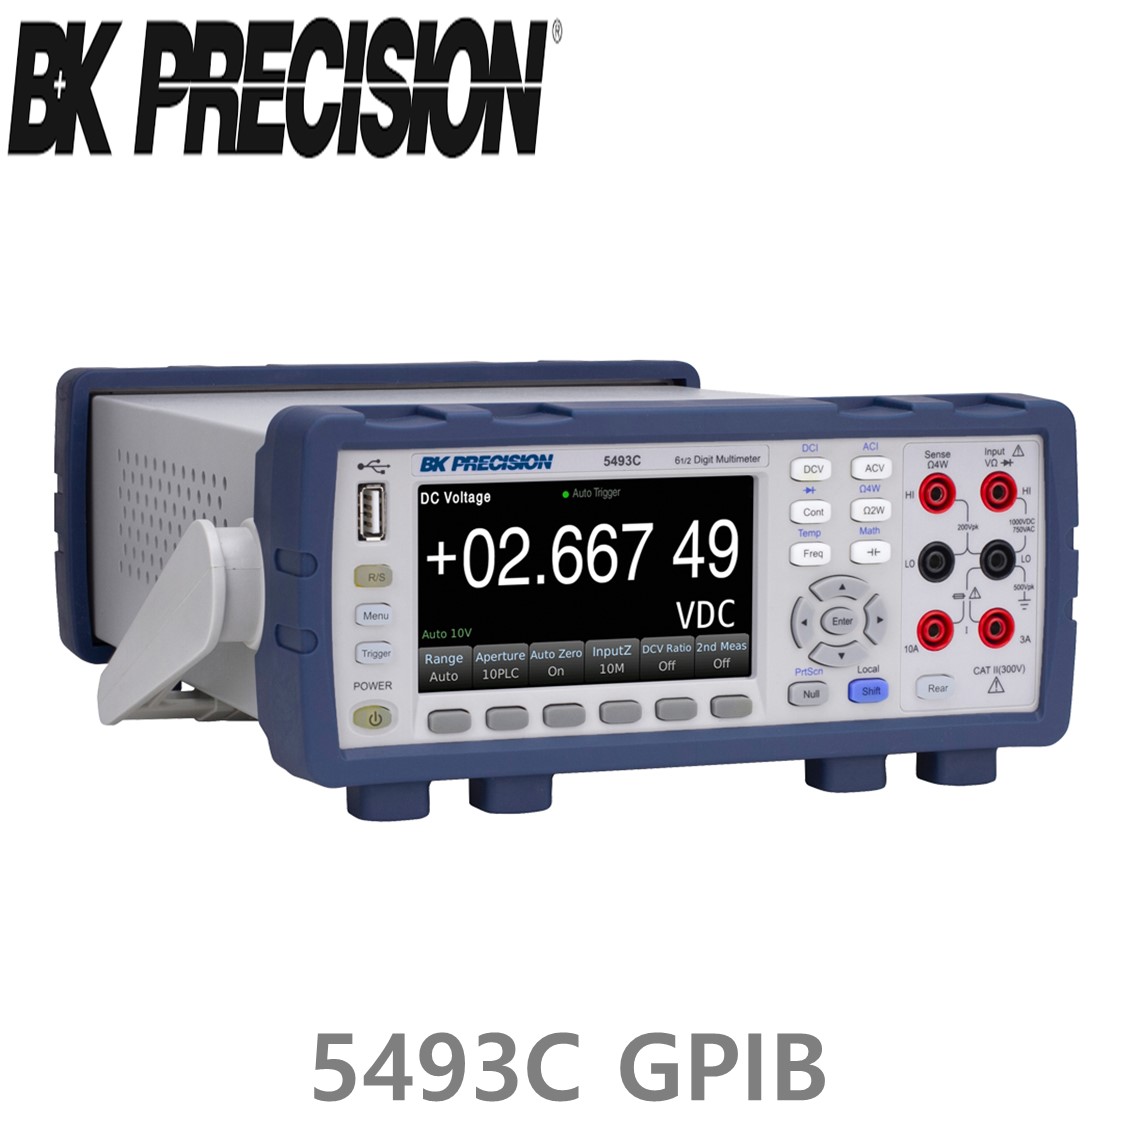 [ BK Precision ] 5493C GPIB  6 1/2 벤치형 디지털 멀티미터 (GPIB포함)